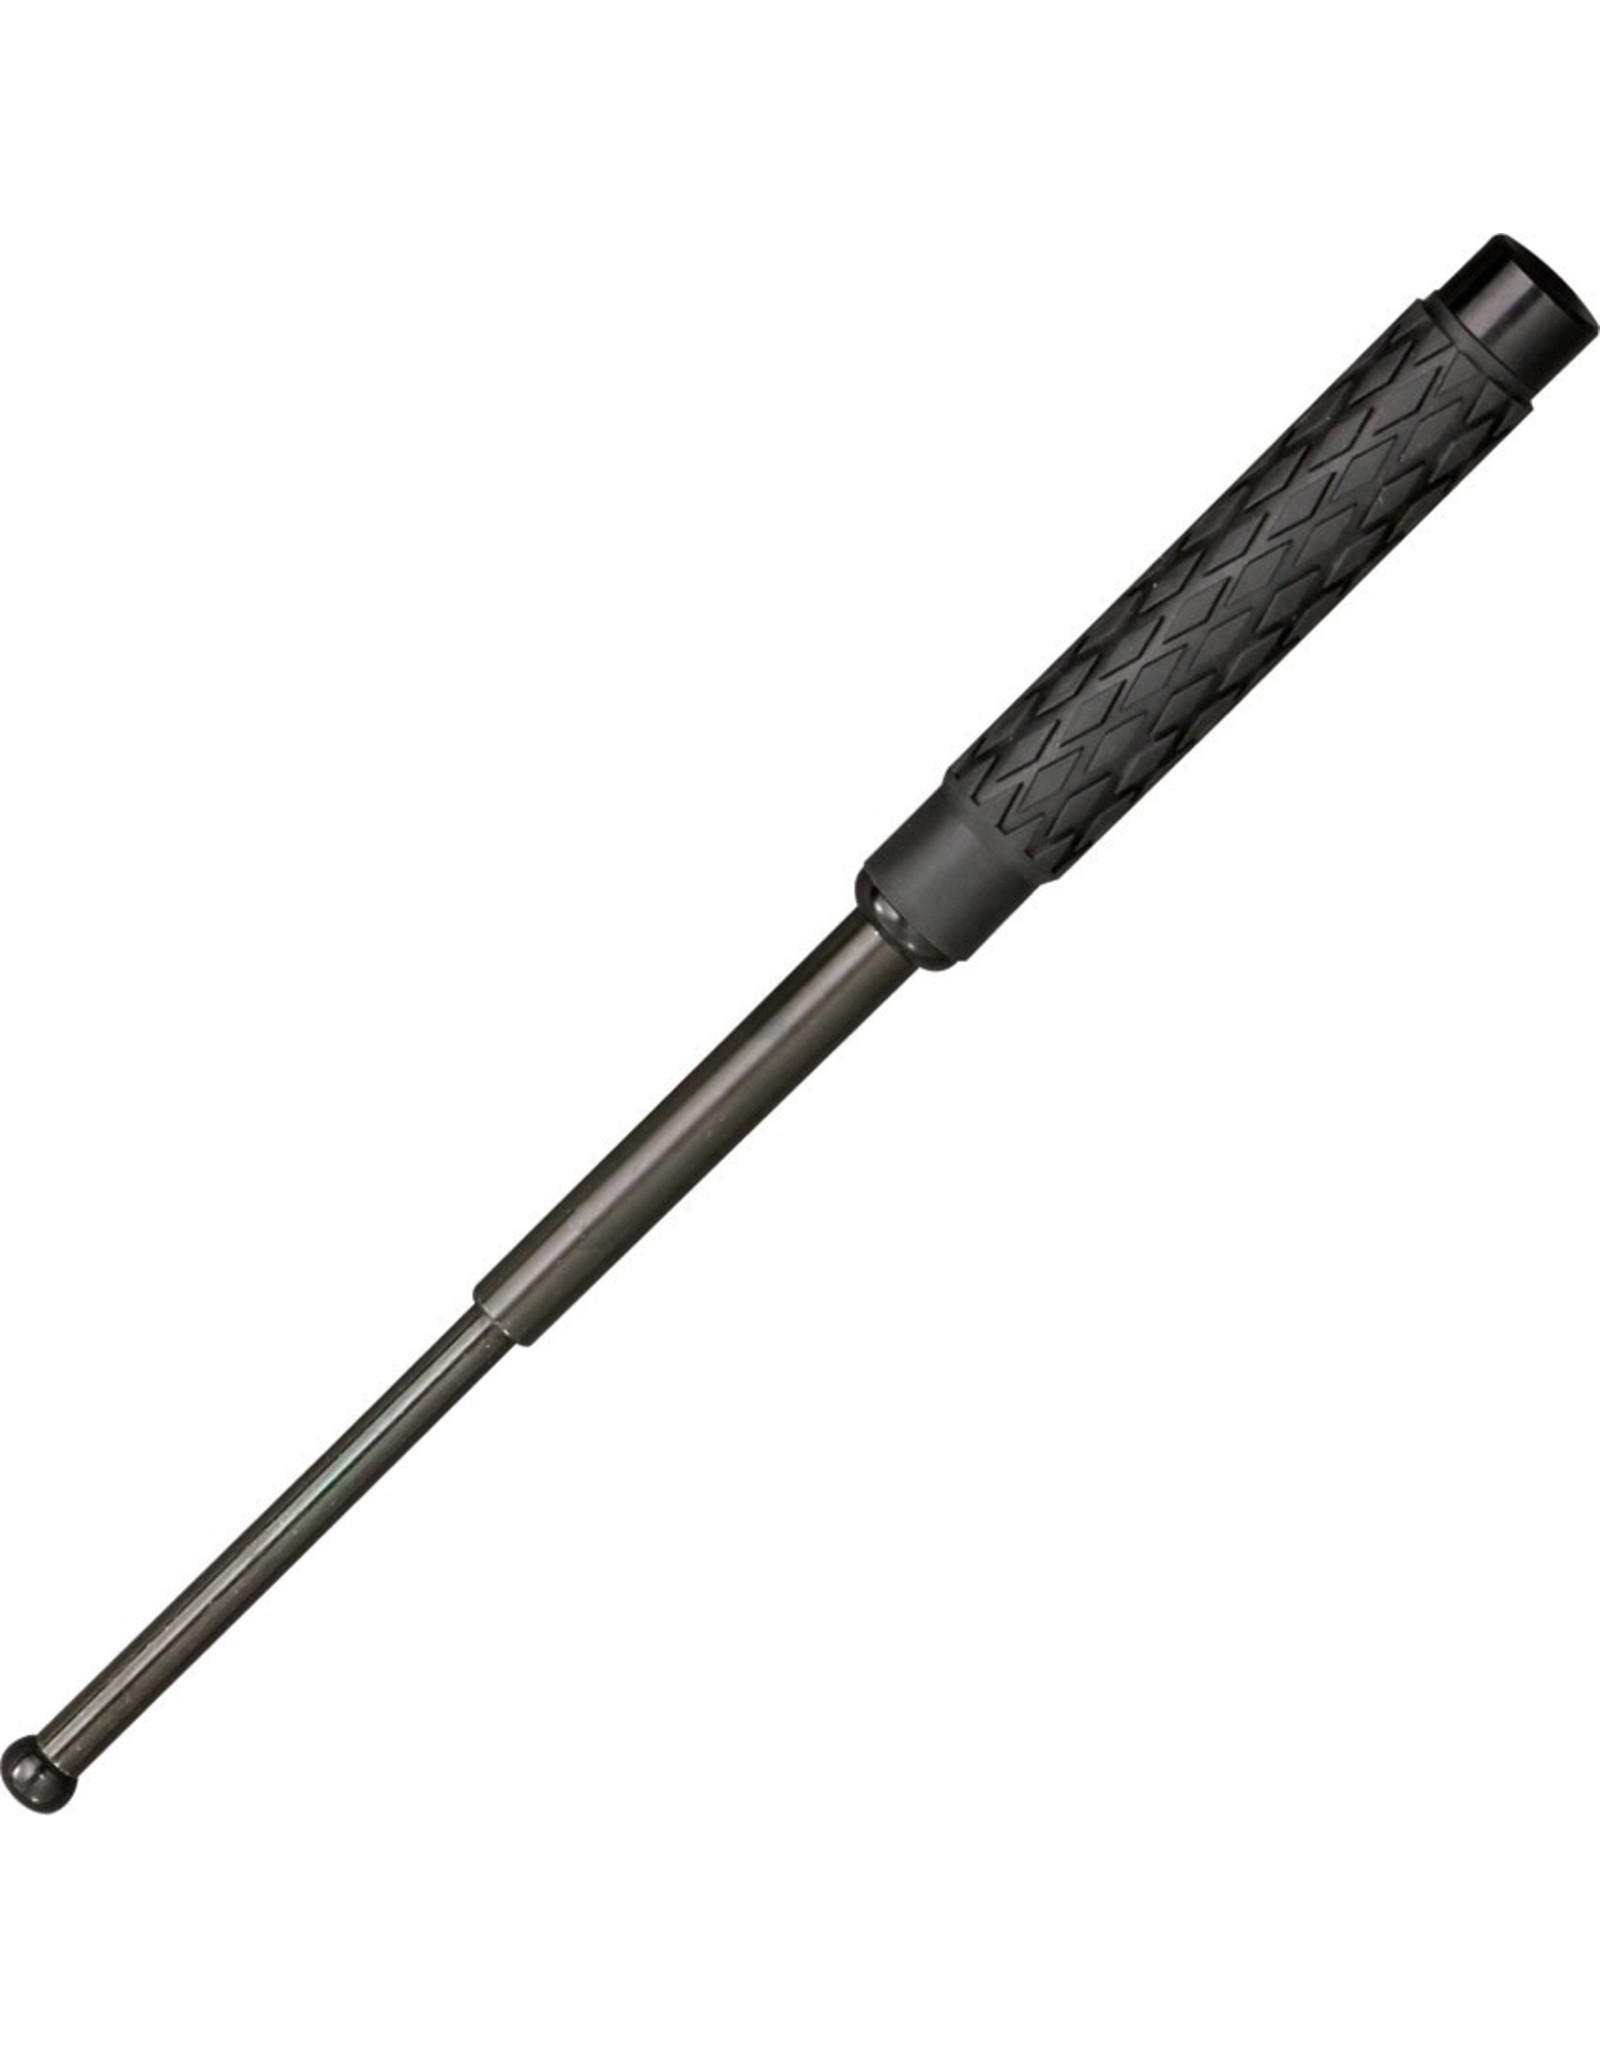 Kwik Force  16" Solid Steel Expandable Baton, Nylon Pouch - 220032-16